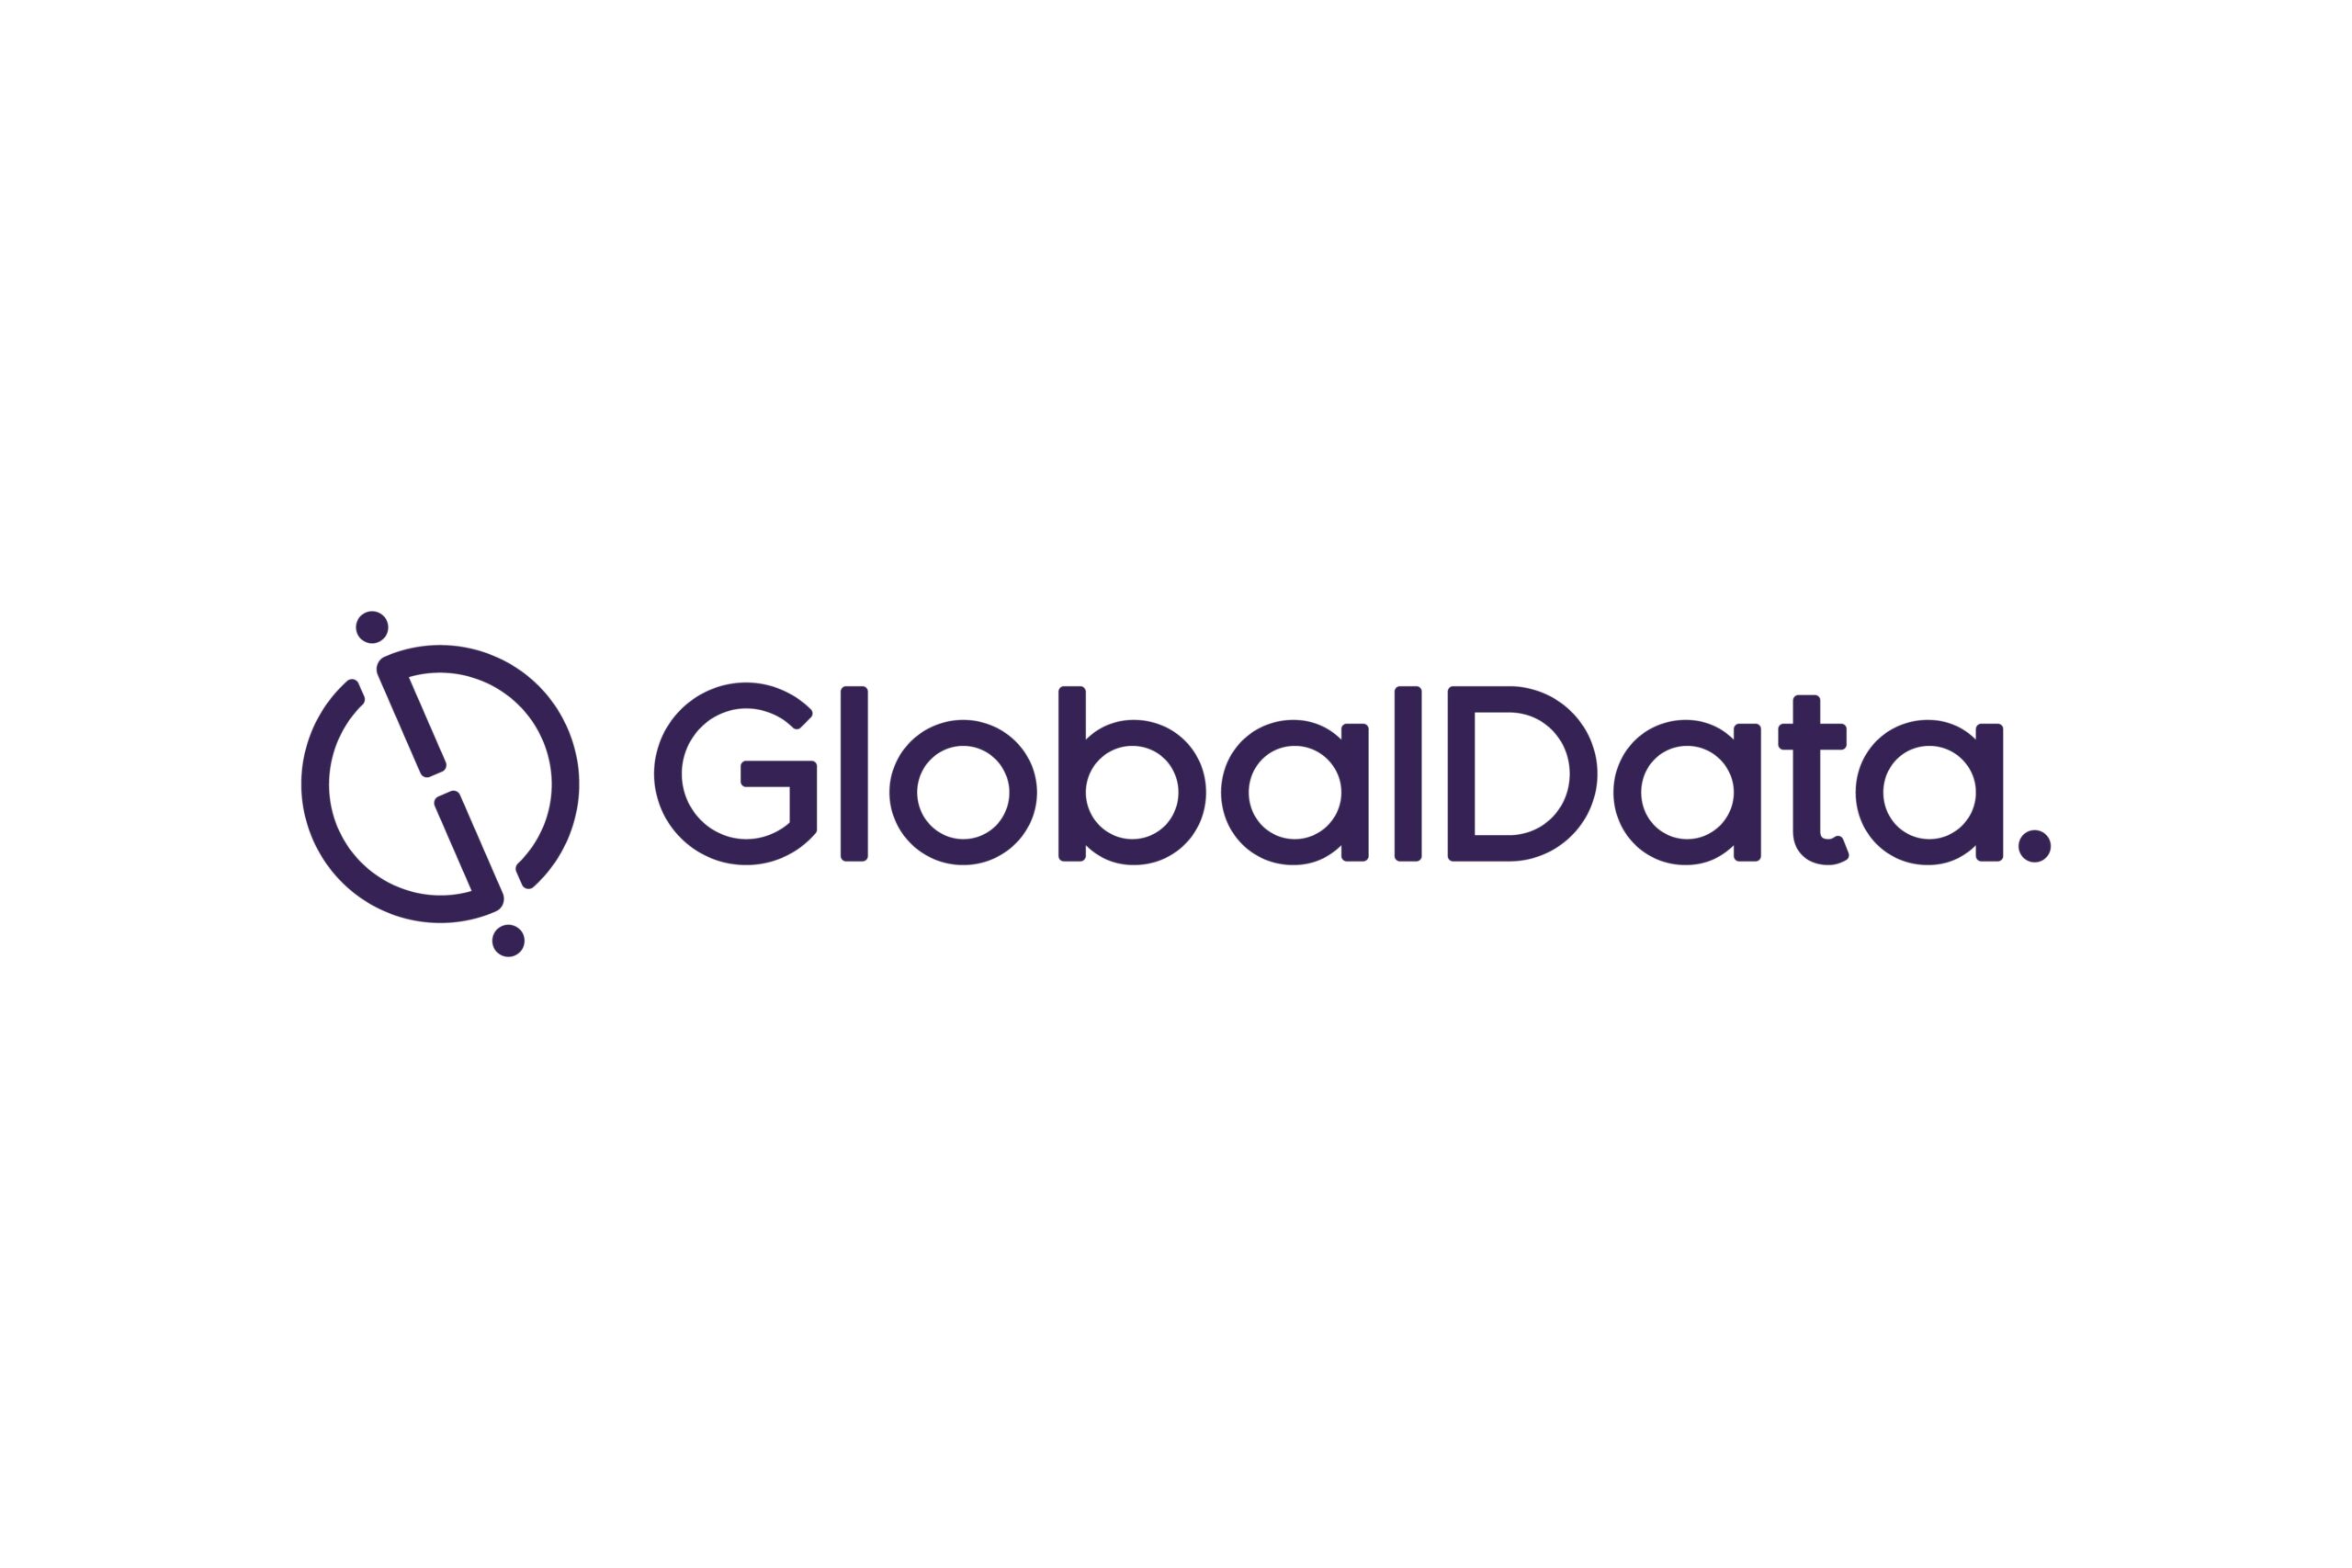 www.globaldata.com